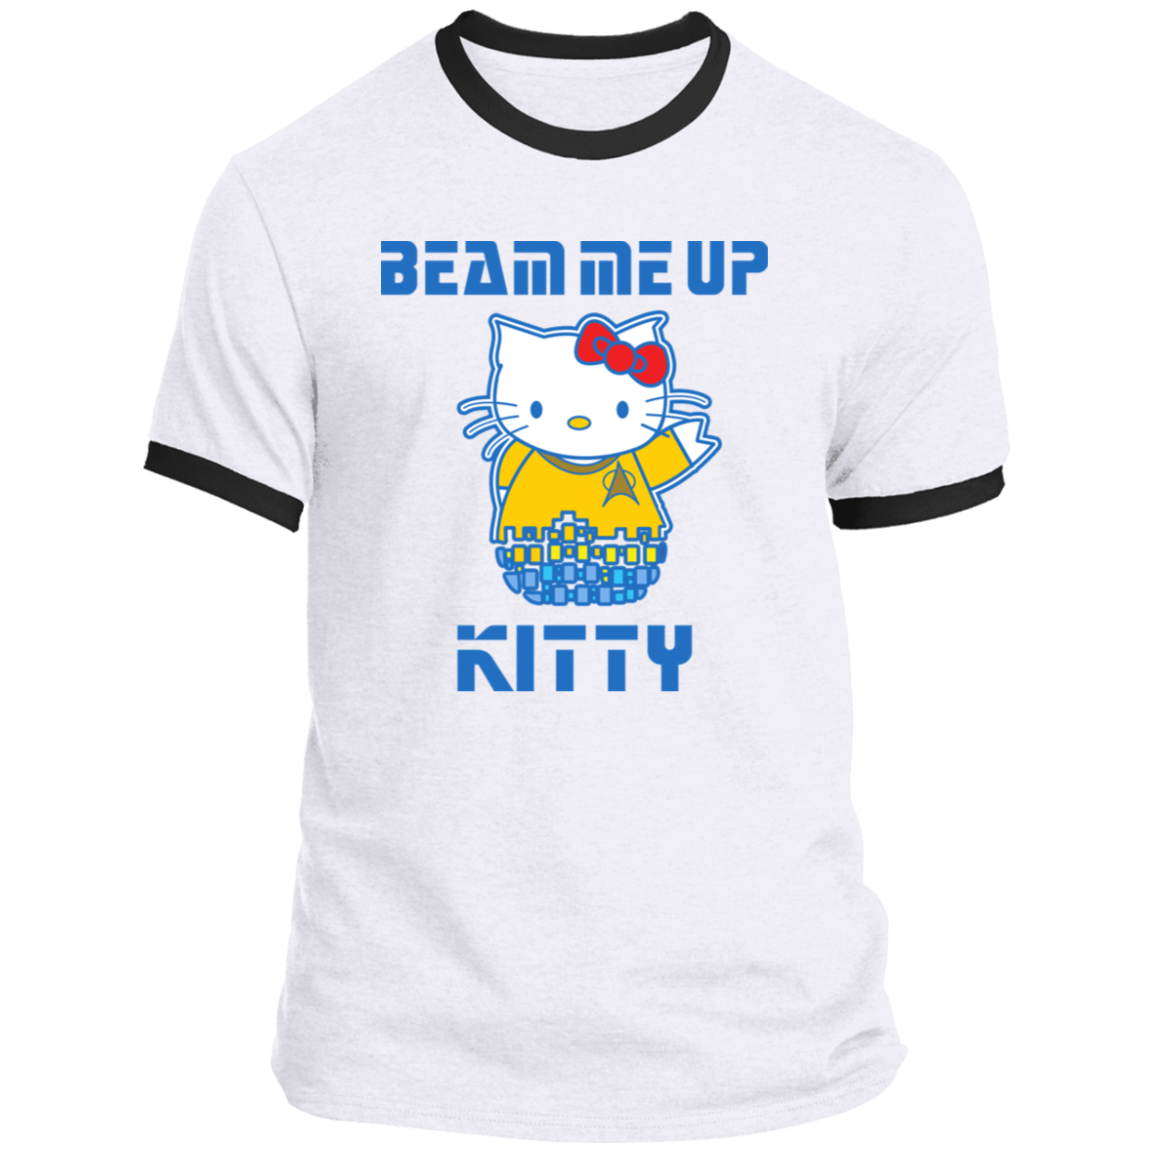 ArtichokeUSA Custom Design. Beam Me Up Kitty. Fan Art / Parody. Ringer Tee